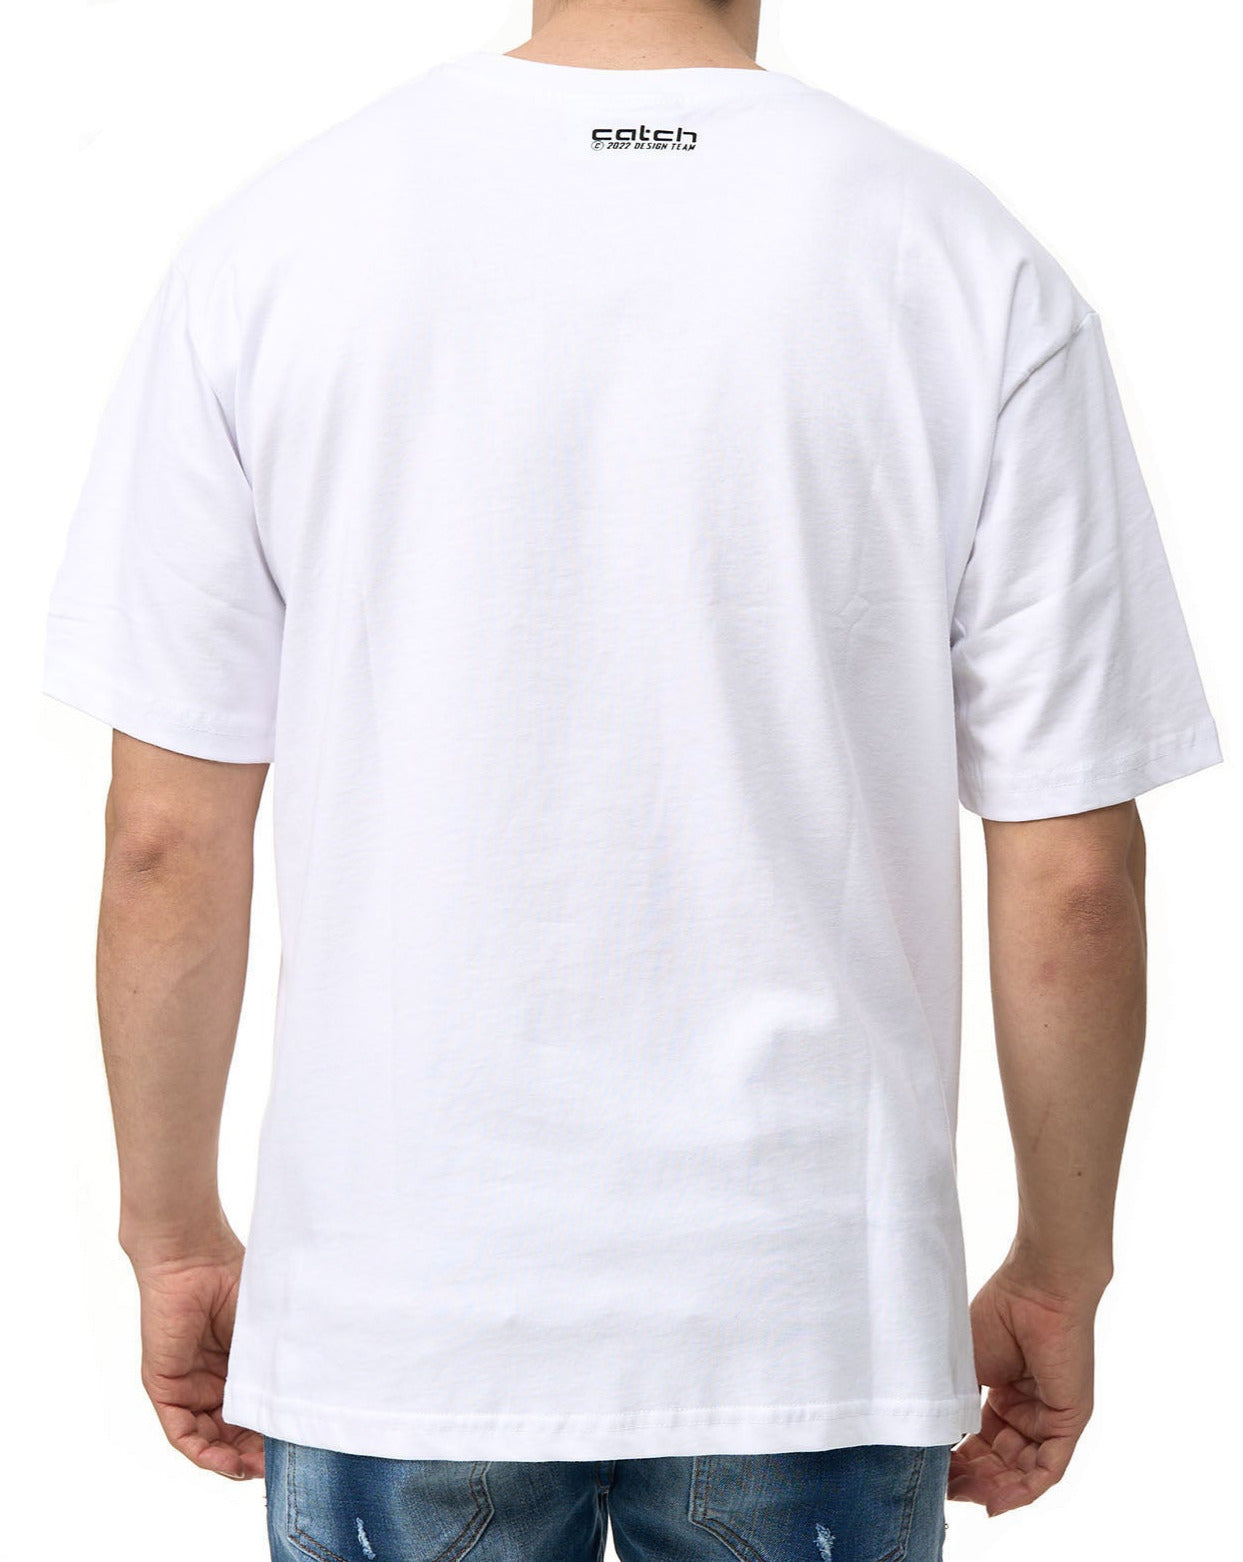 Men's T-shirt, oversize look, print on the front, model C747